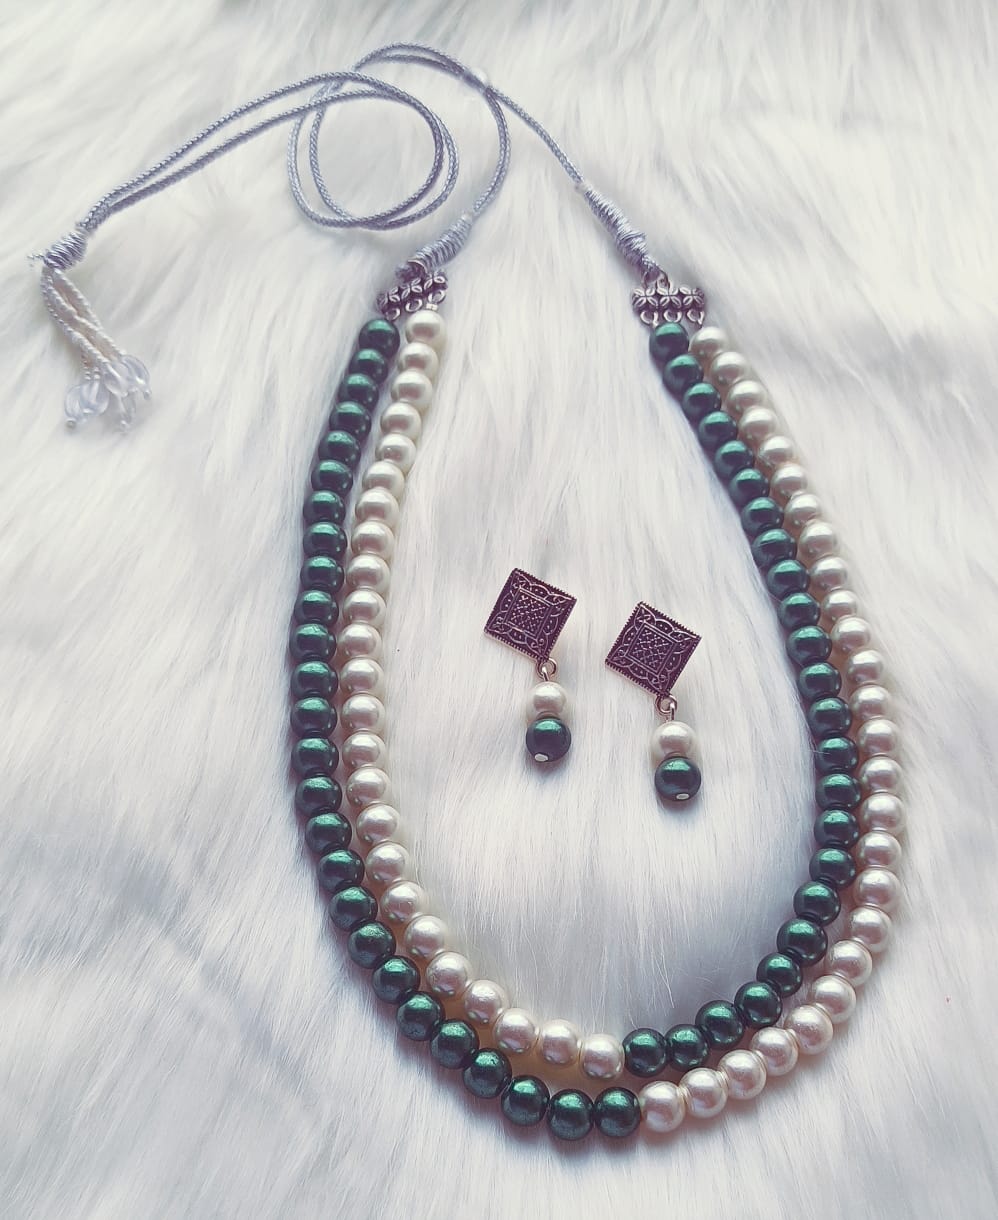 The warrior Ganpati necklace set